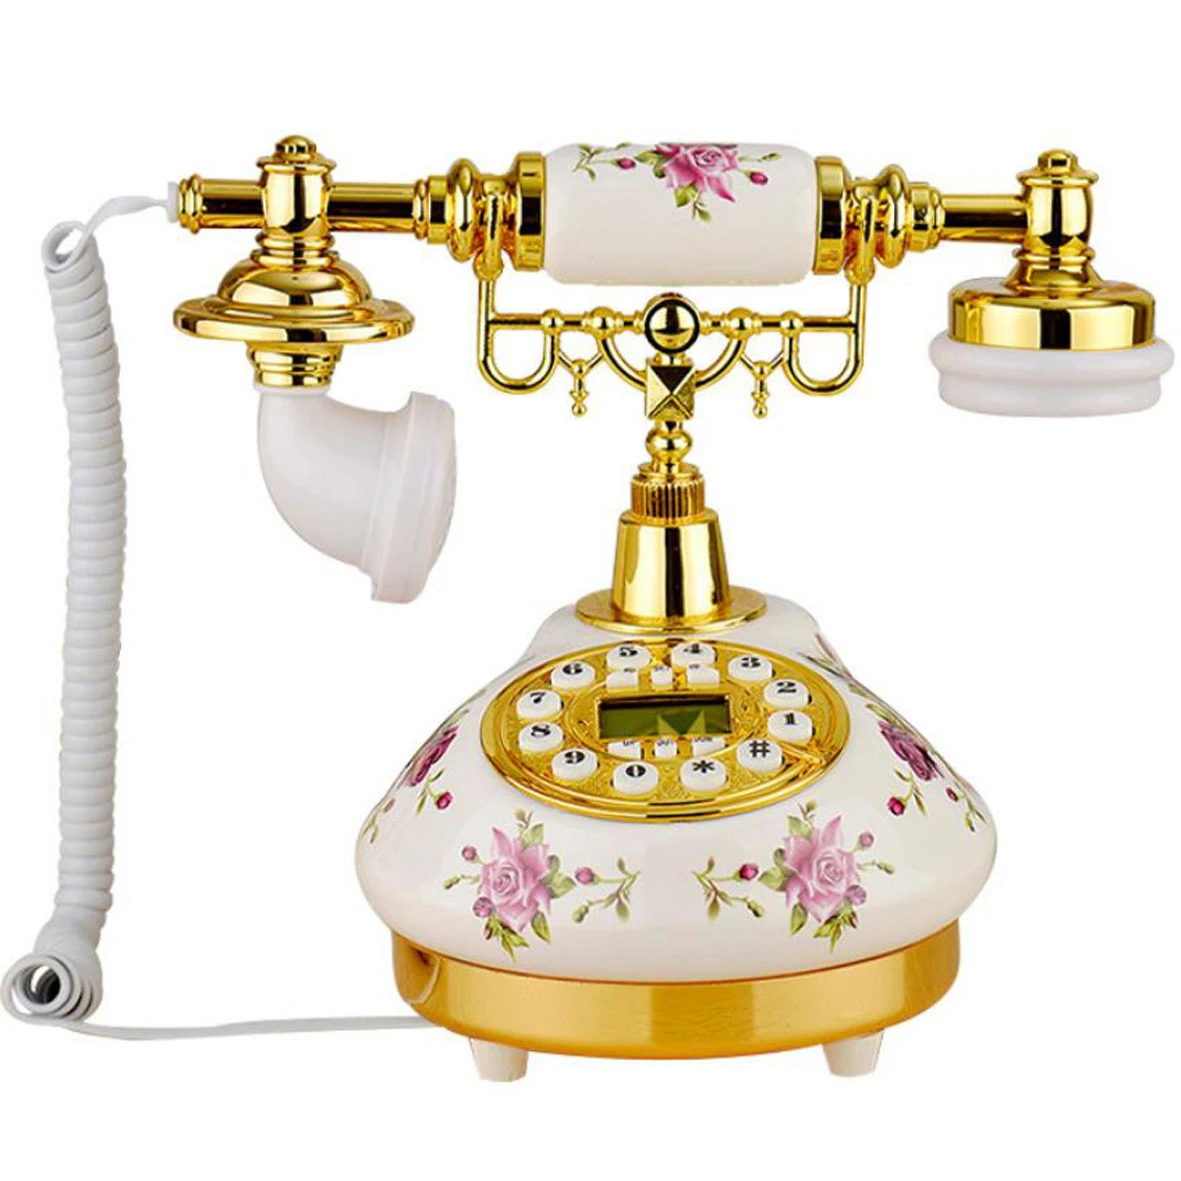 Christmas Gift Unique Decorative Vintage Antique Telephone Corded Phone